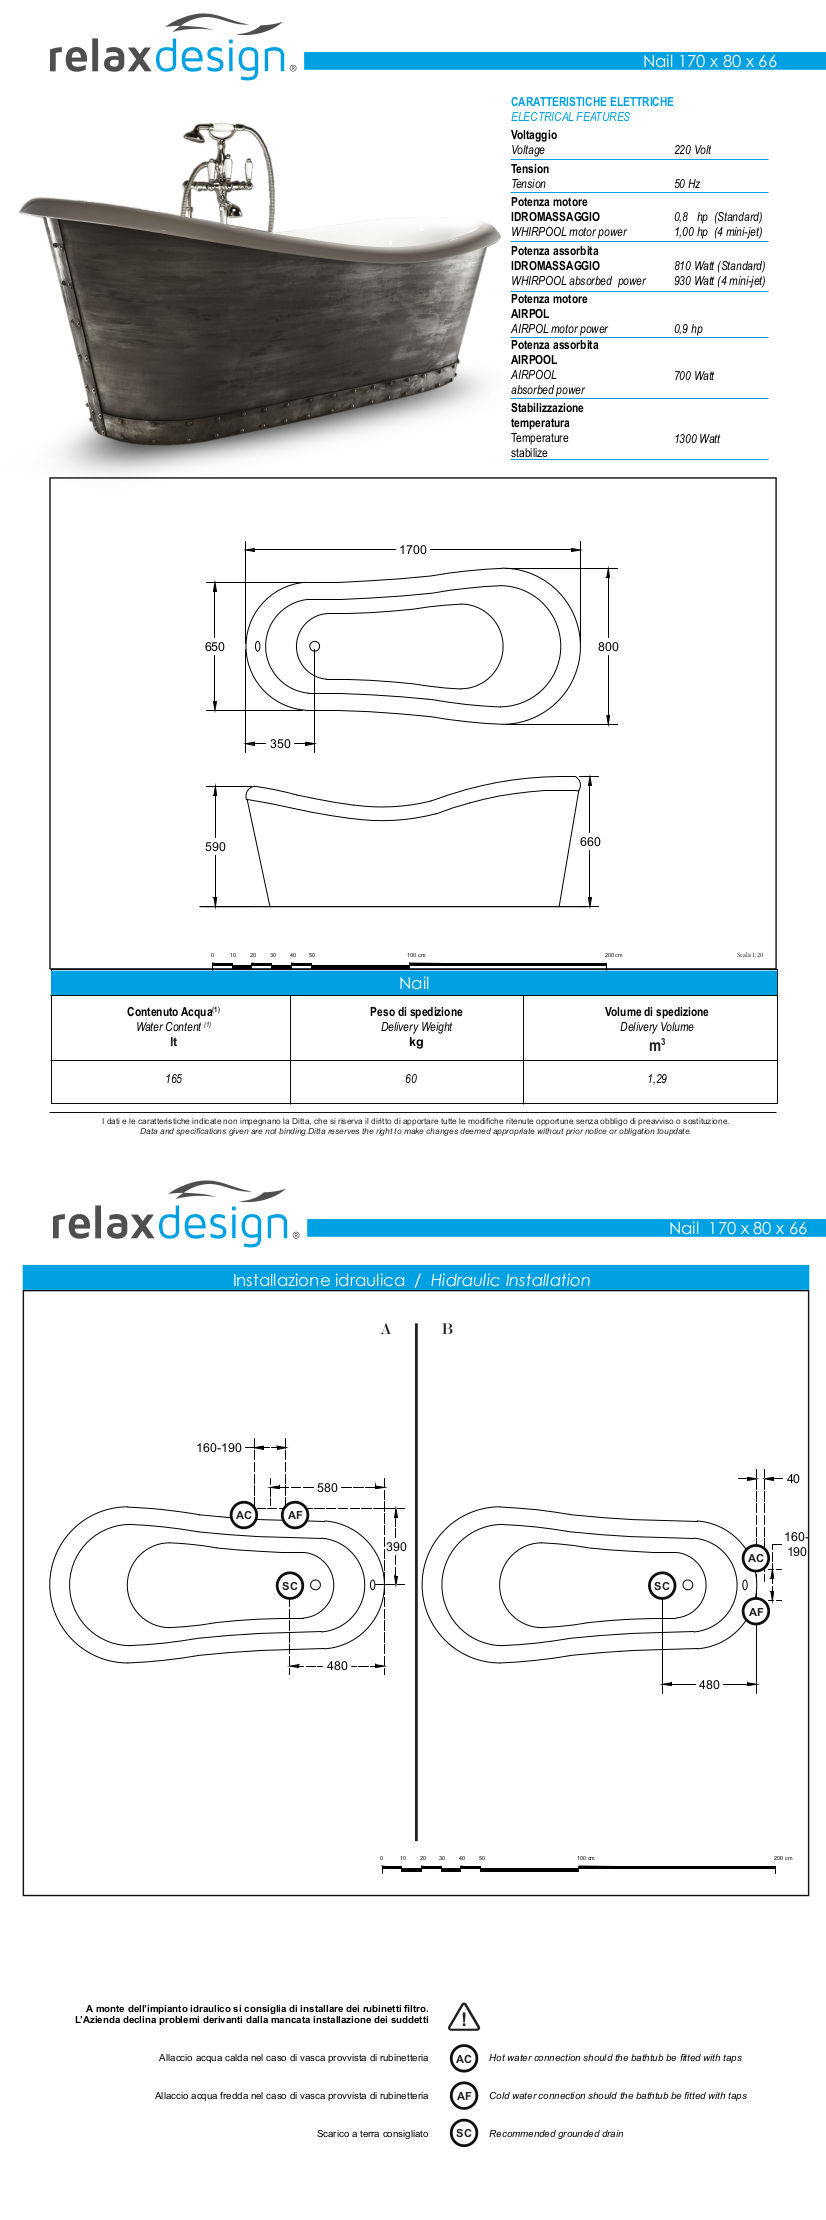 nail relax design badewanne datenblatt